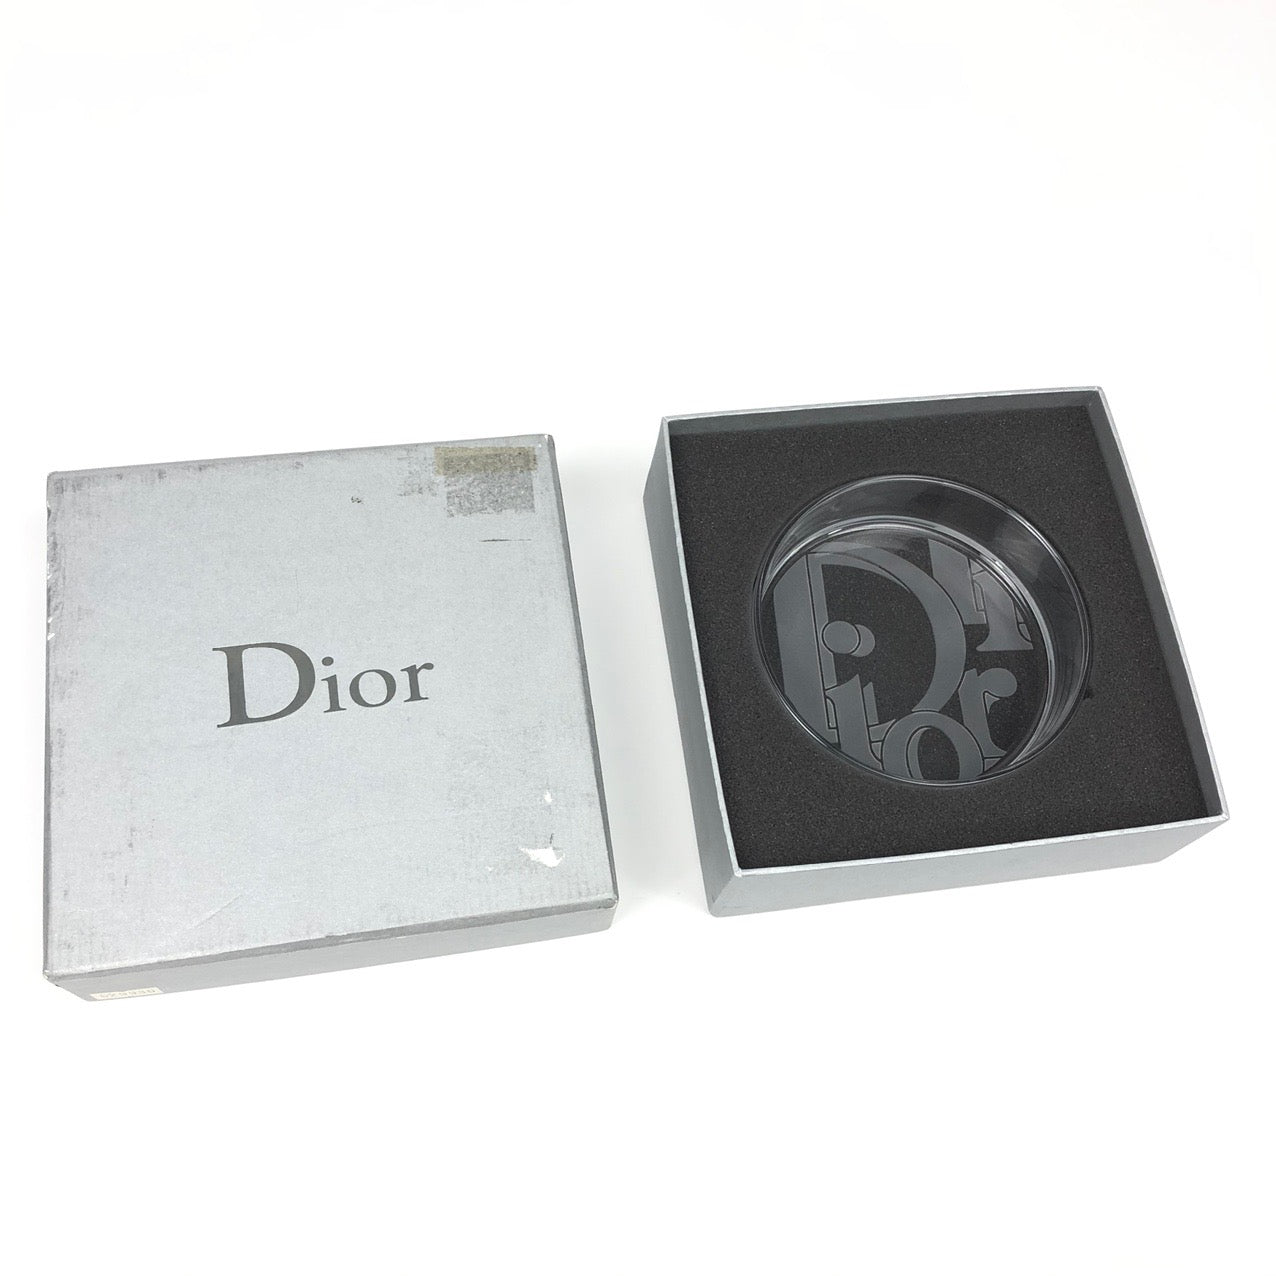 Christian Dior Monogram Dish